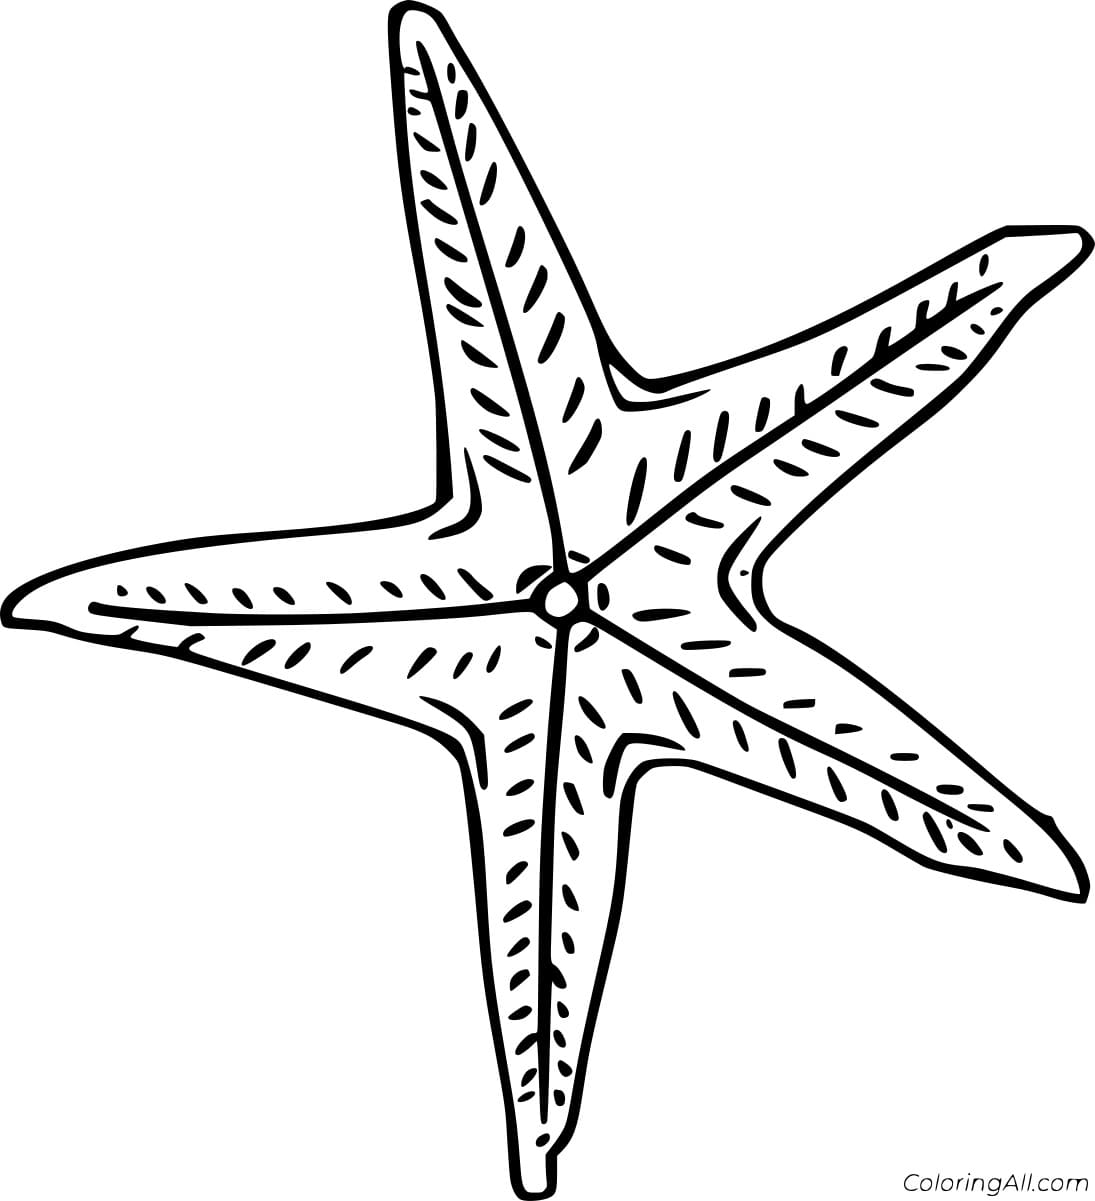 One Sea Star Image